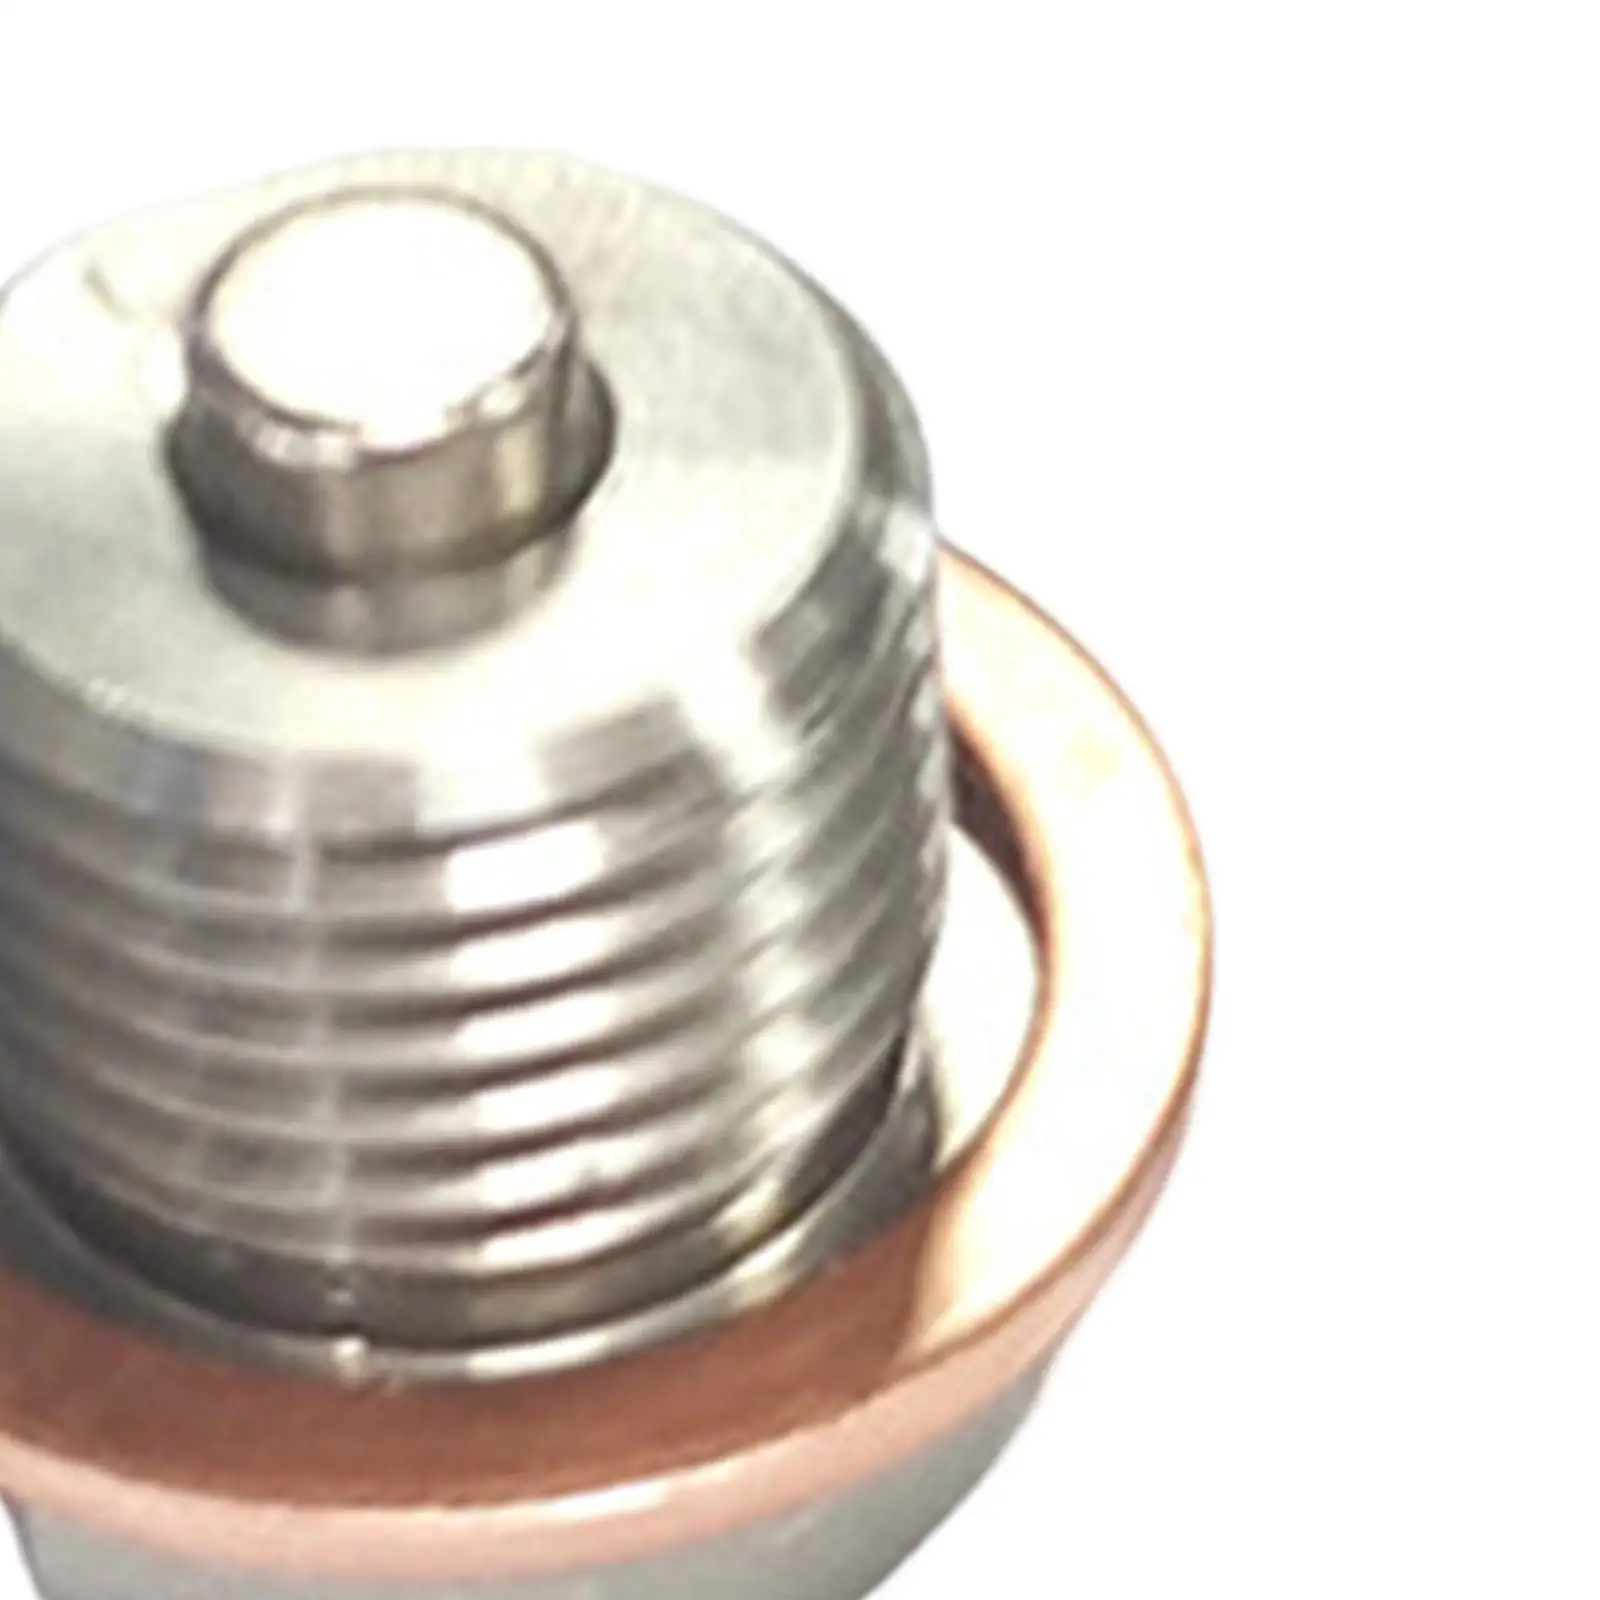 Oil Drain Plug Screw M12x1.75 Neodymium Magnet Bolt for Motorcycle Car